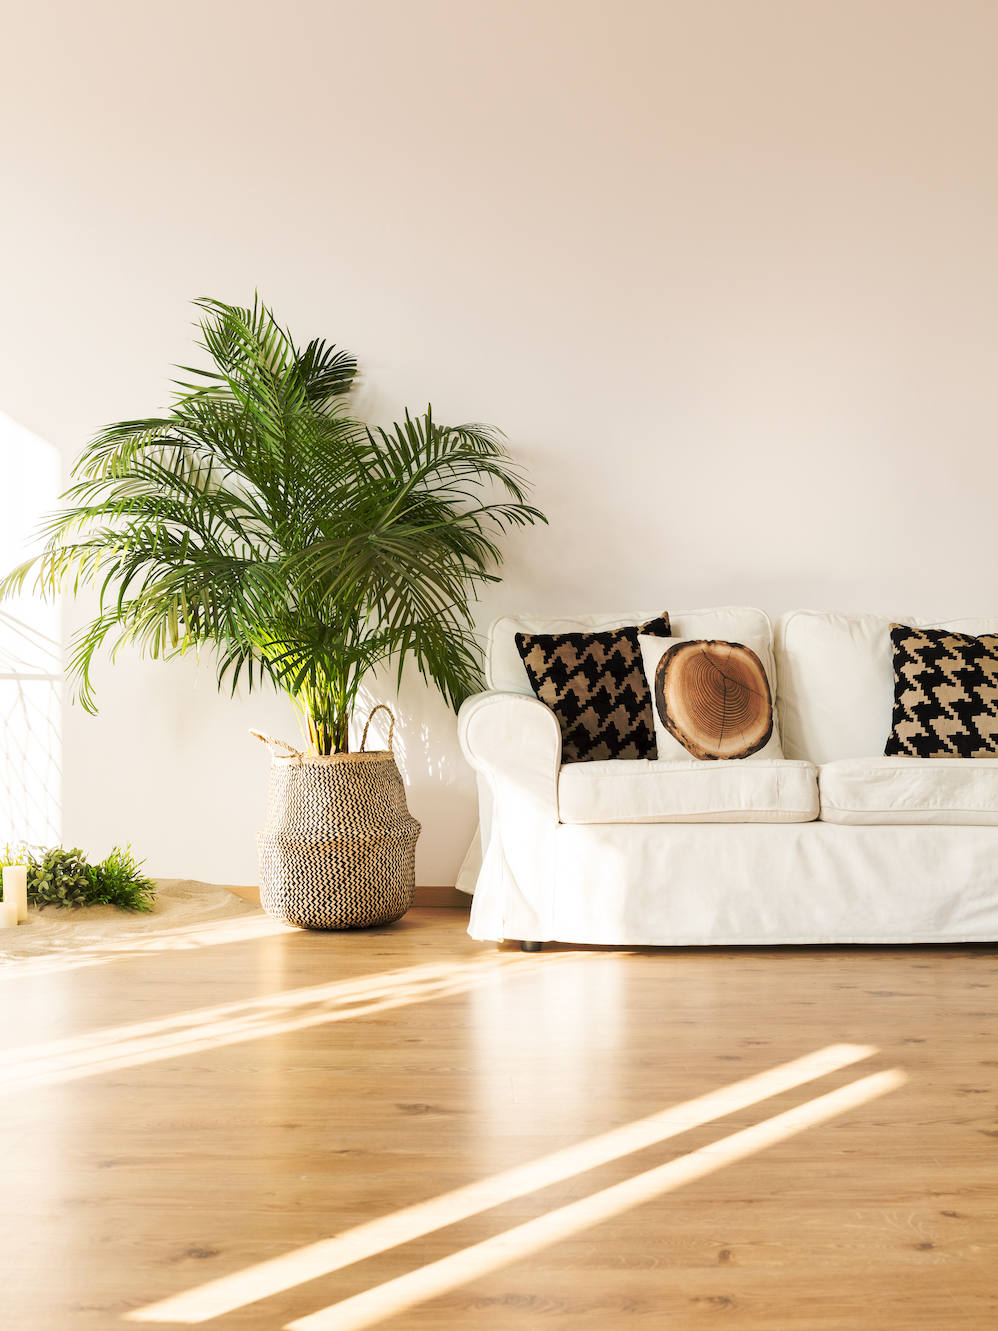 Simple, white living room with sofa, plant, hardwood floor